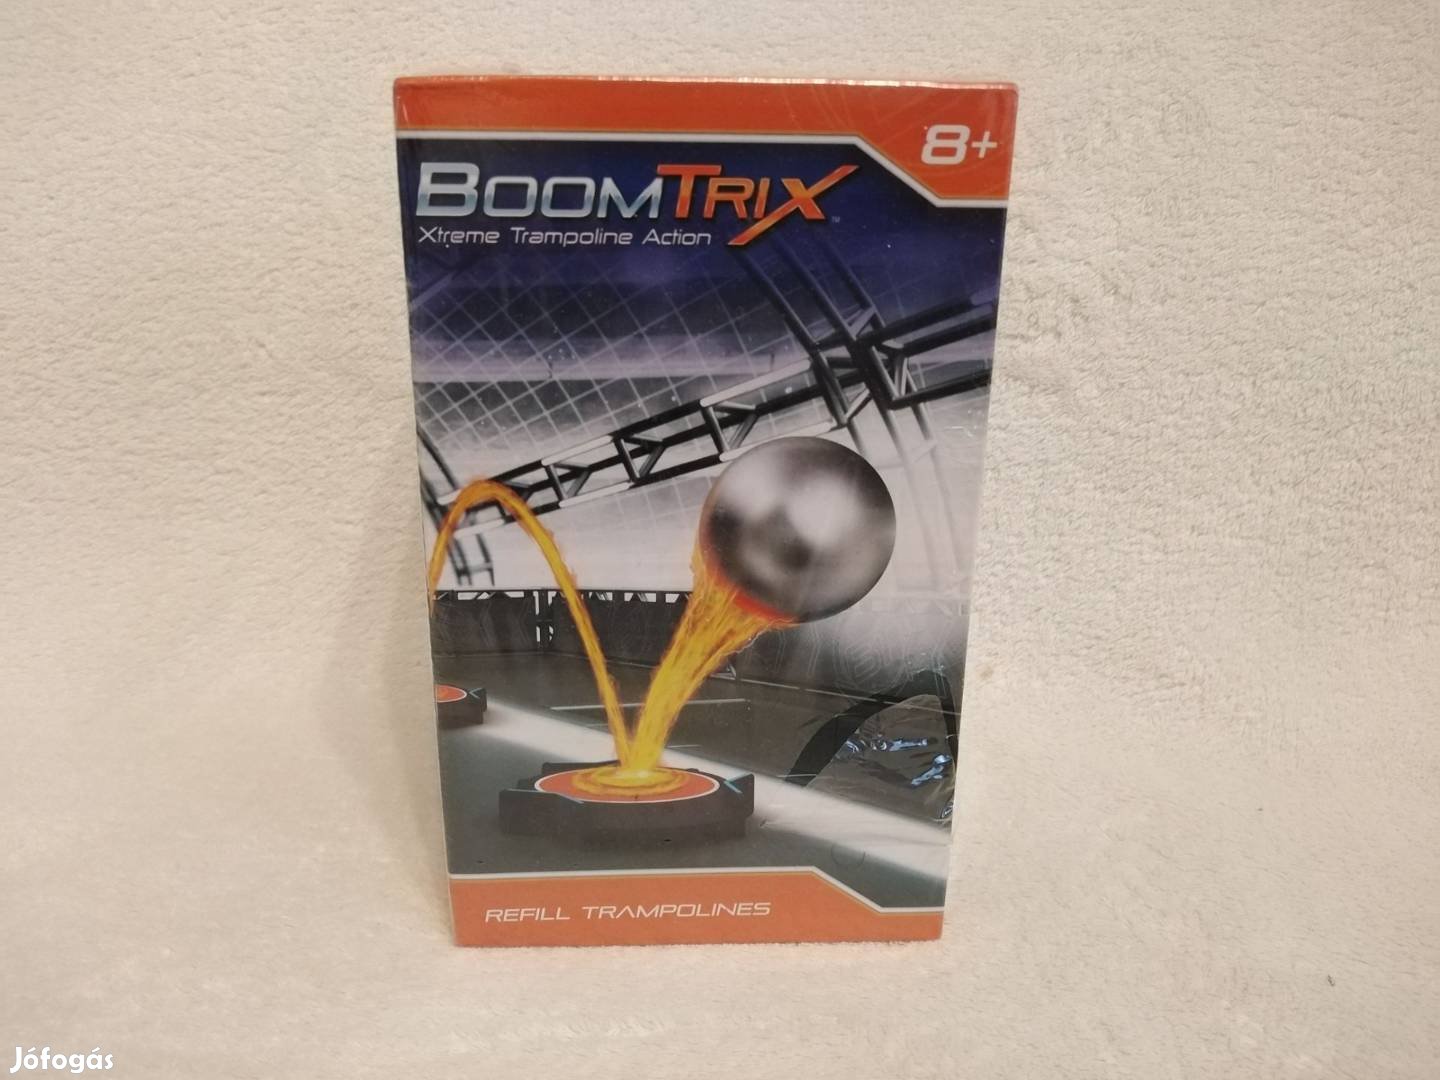 Boomtrix Refill Trampulines új újonnan eladó